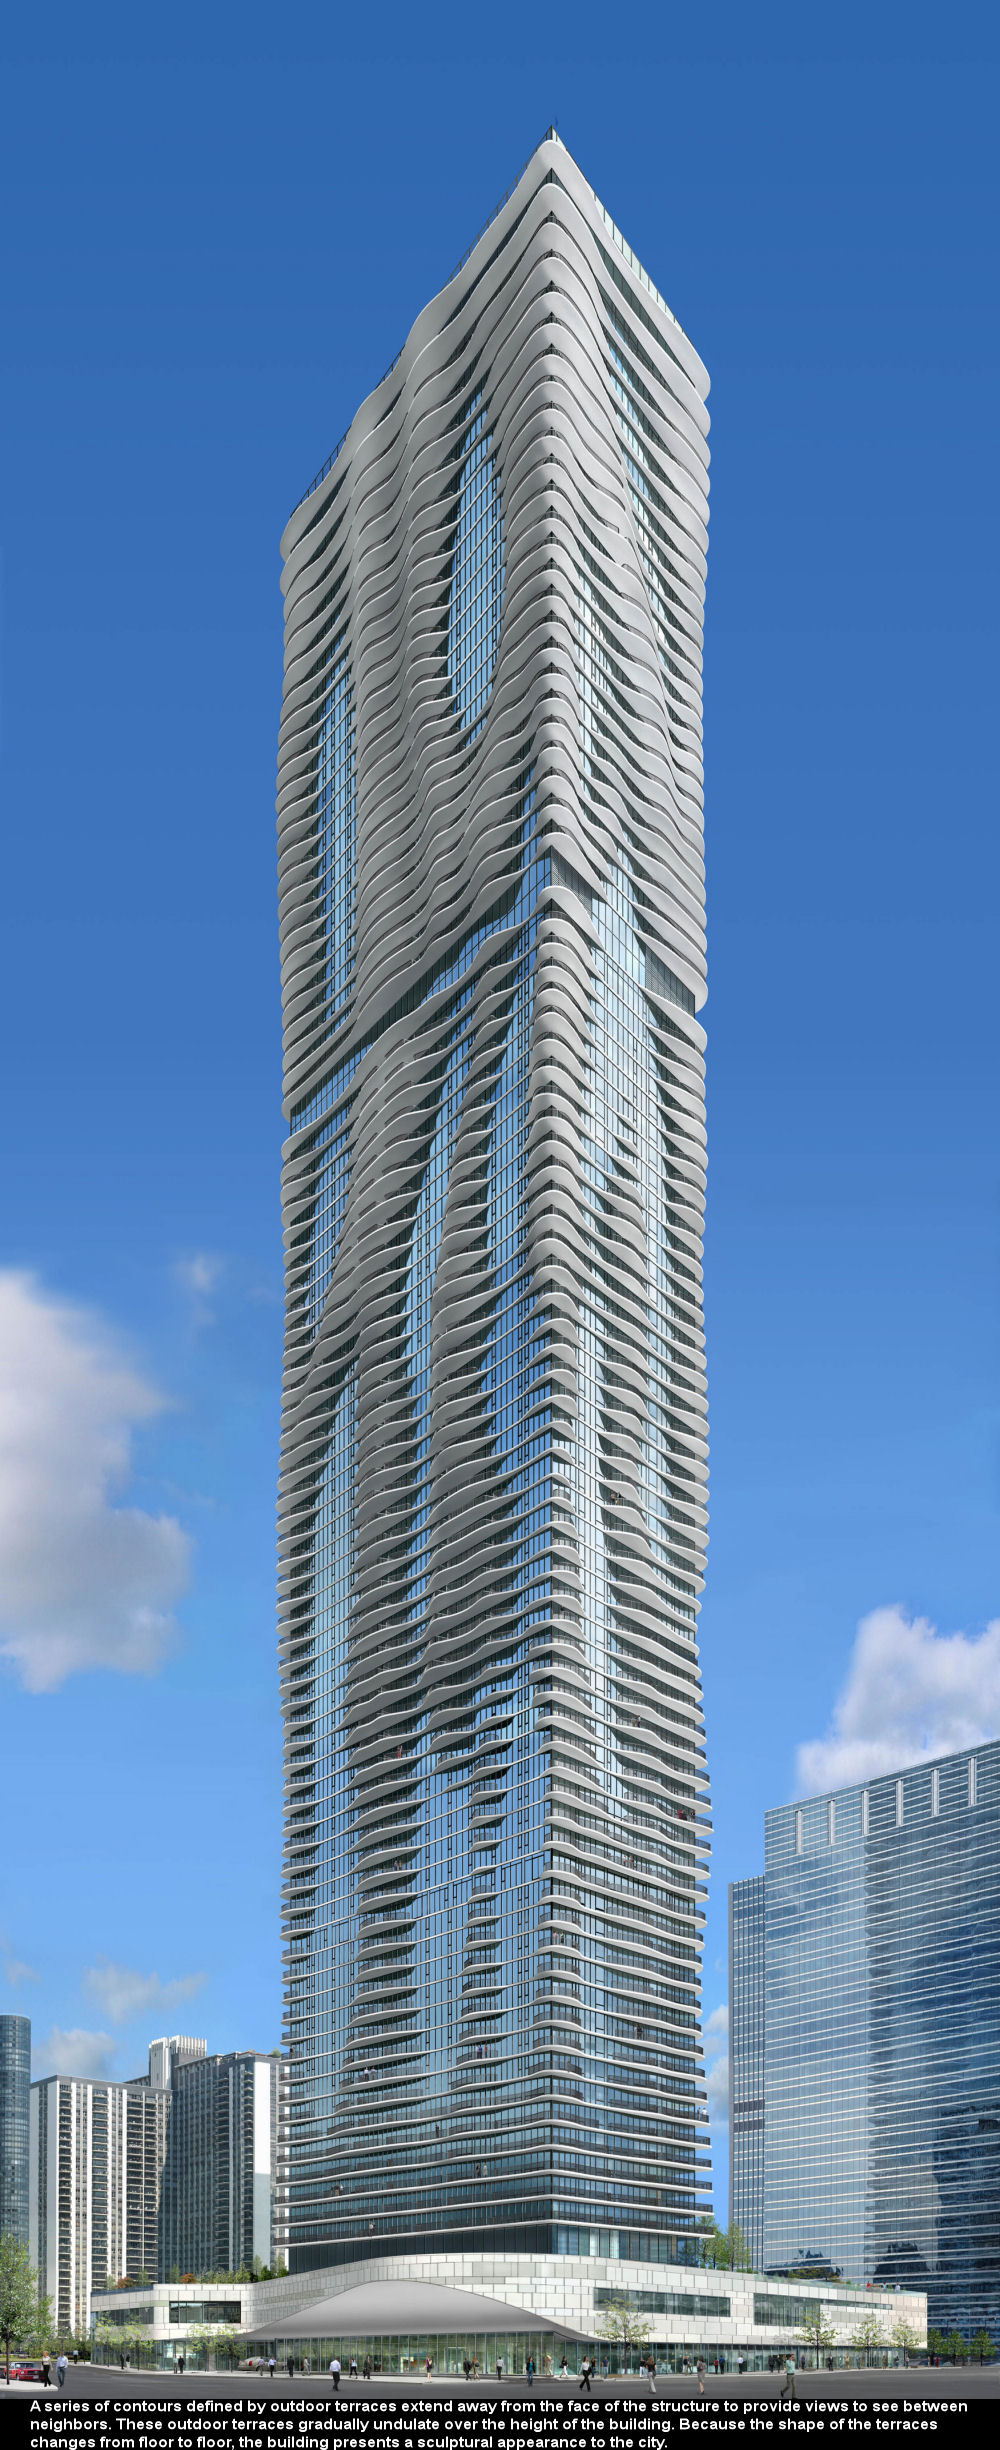 Beautiful Aqua Tower of Chicago